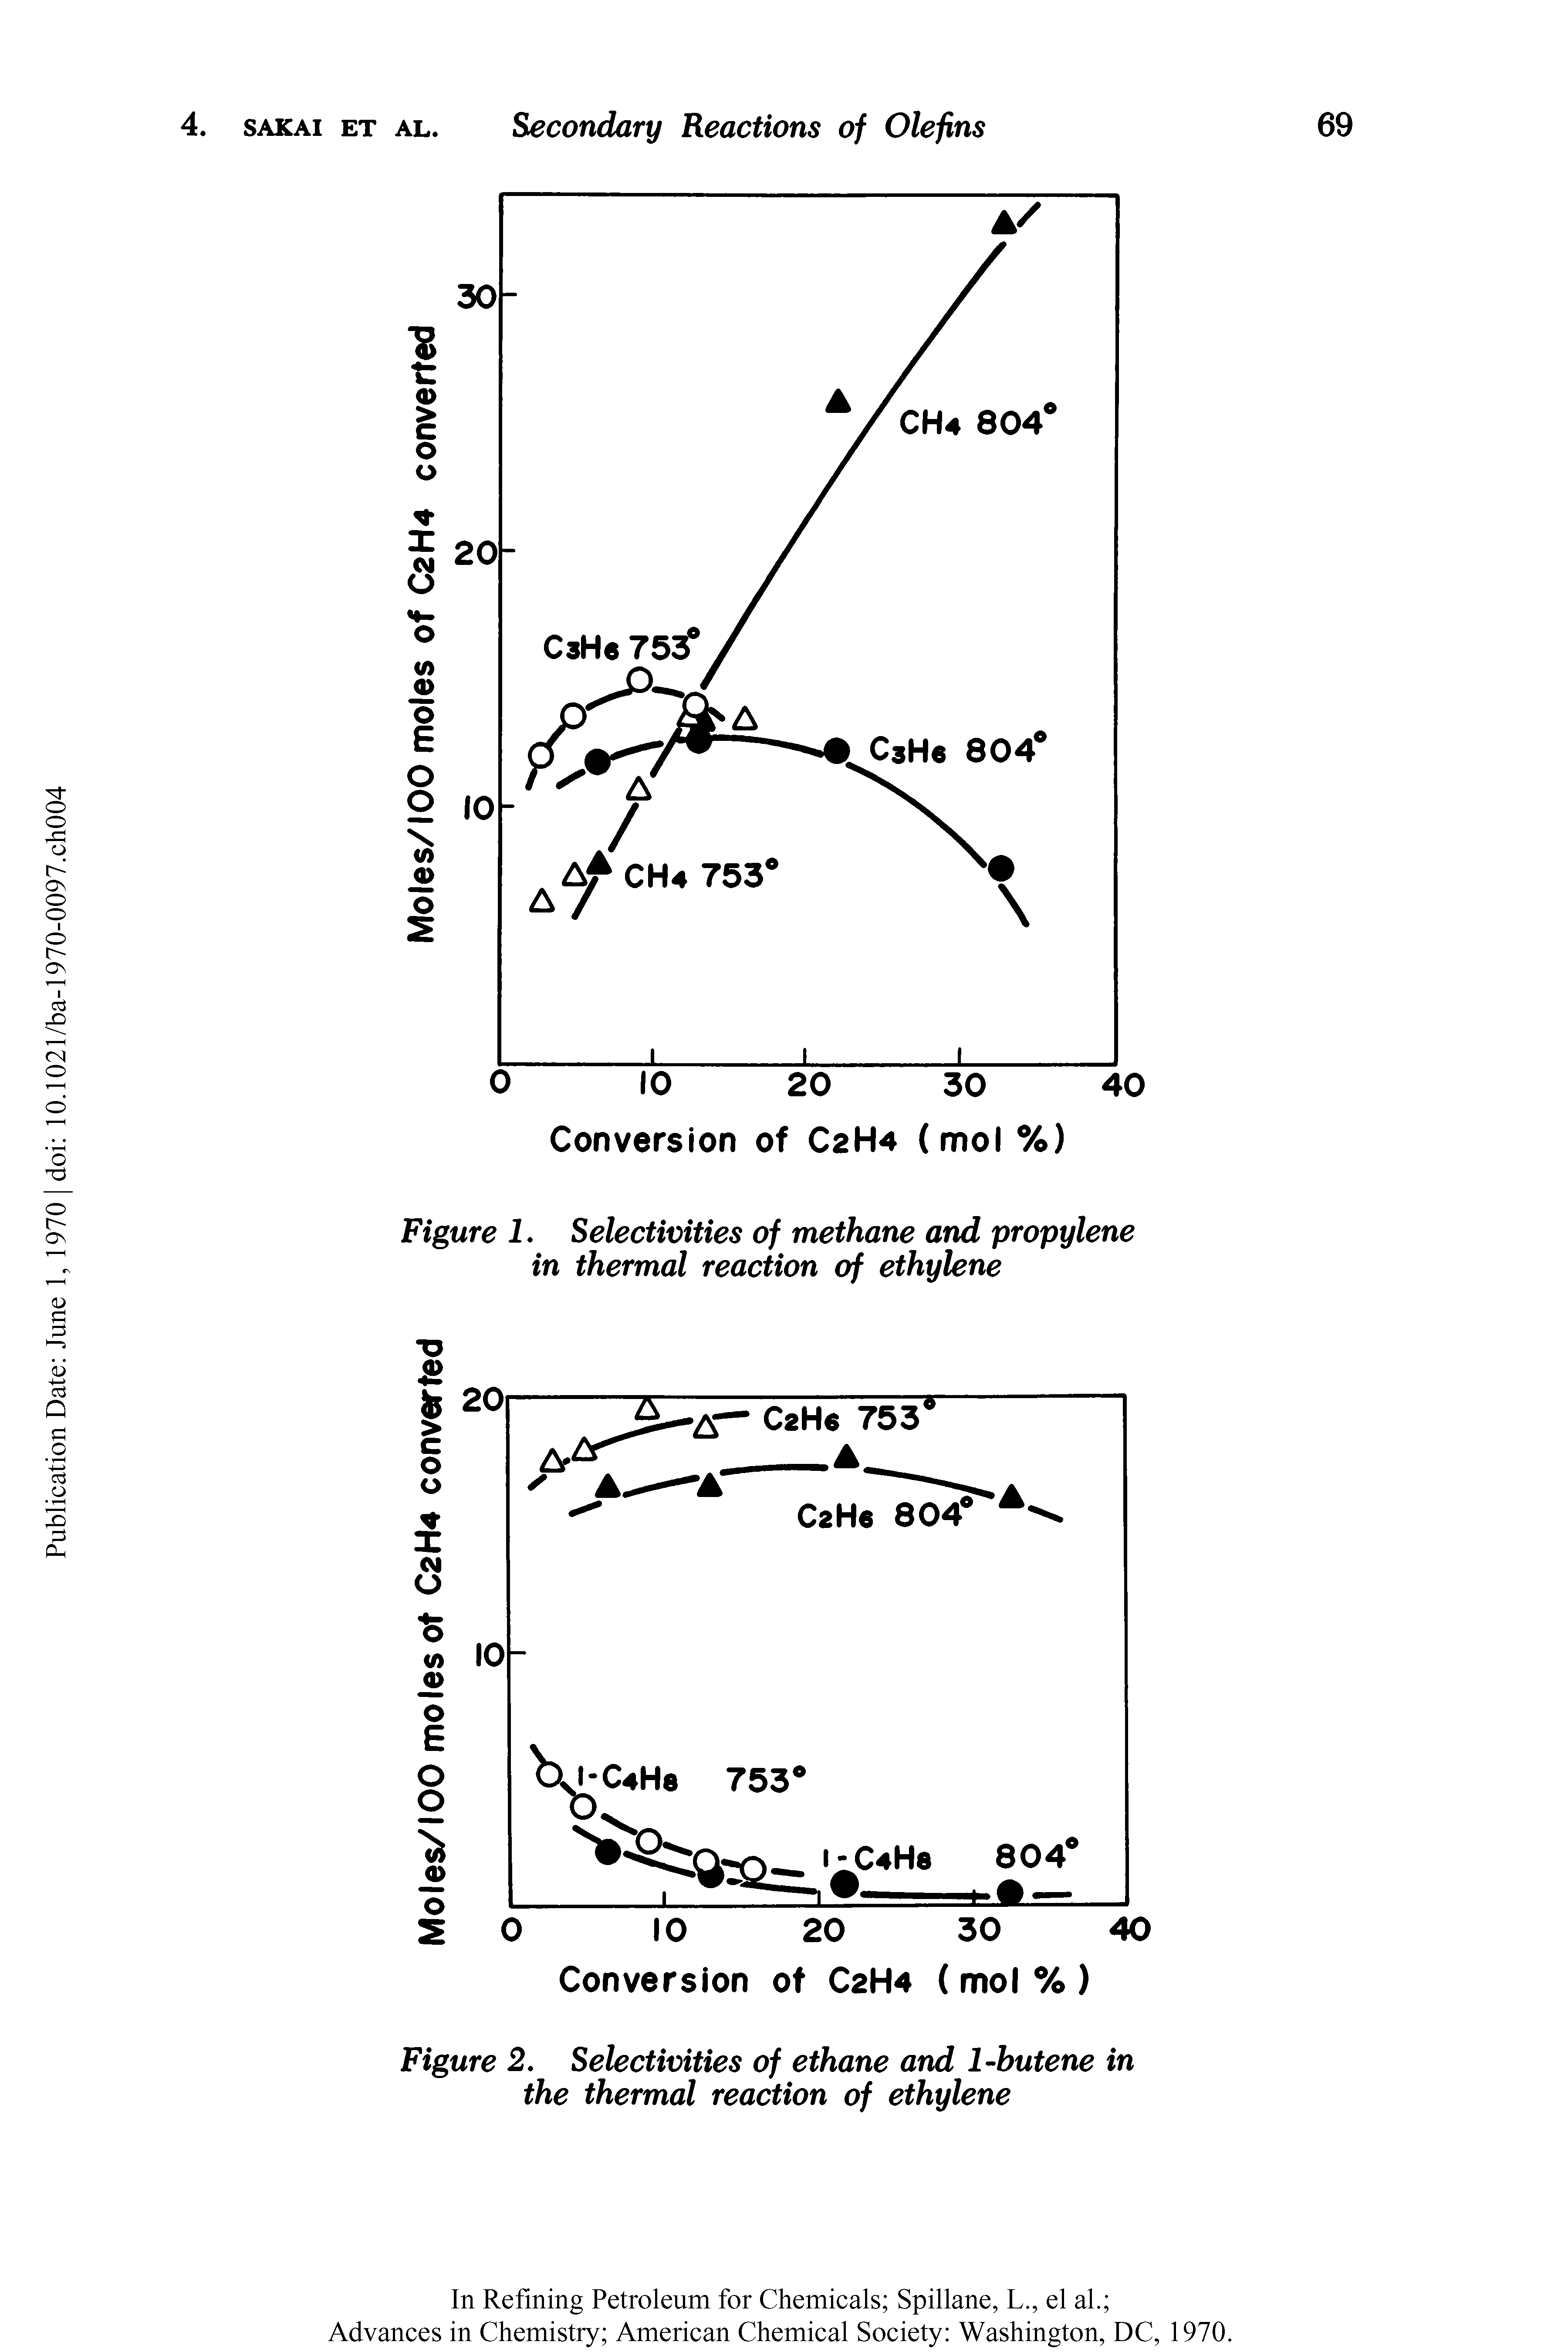 Figure 1. Selectivities of methane and propylene in thermal reaction of ethylene...